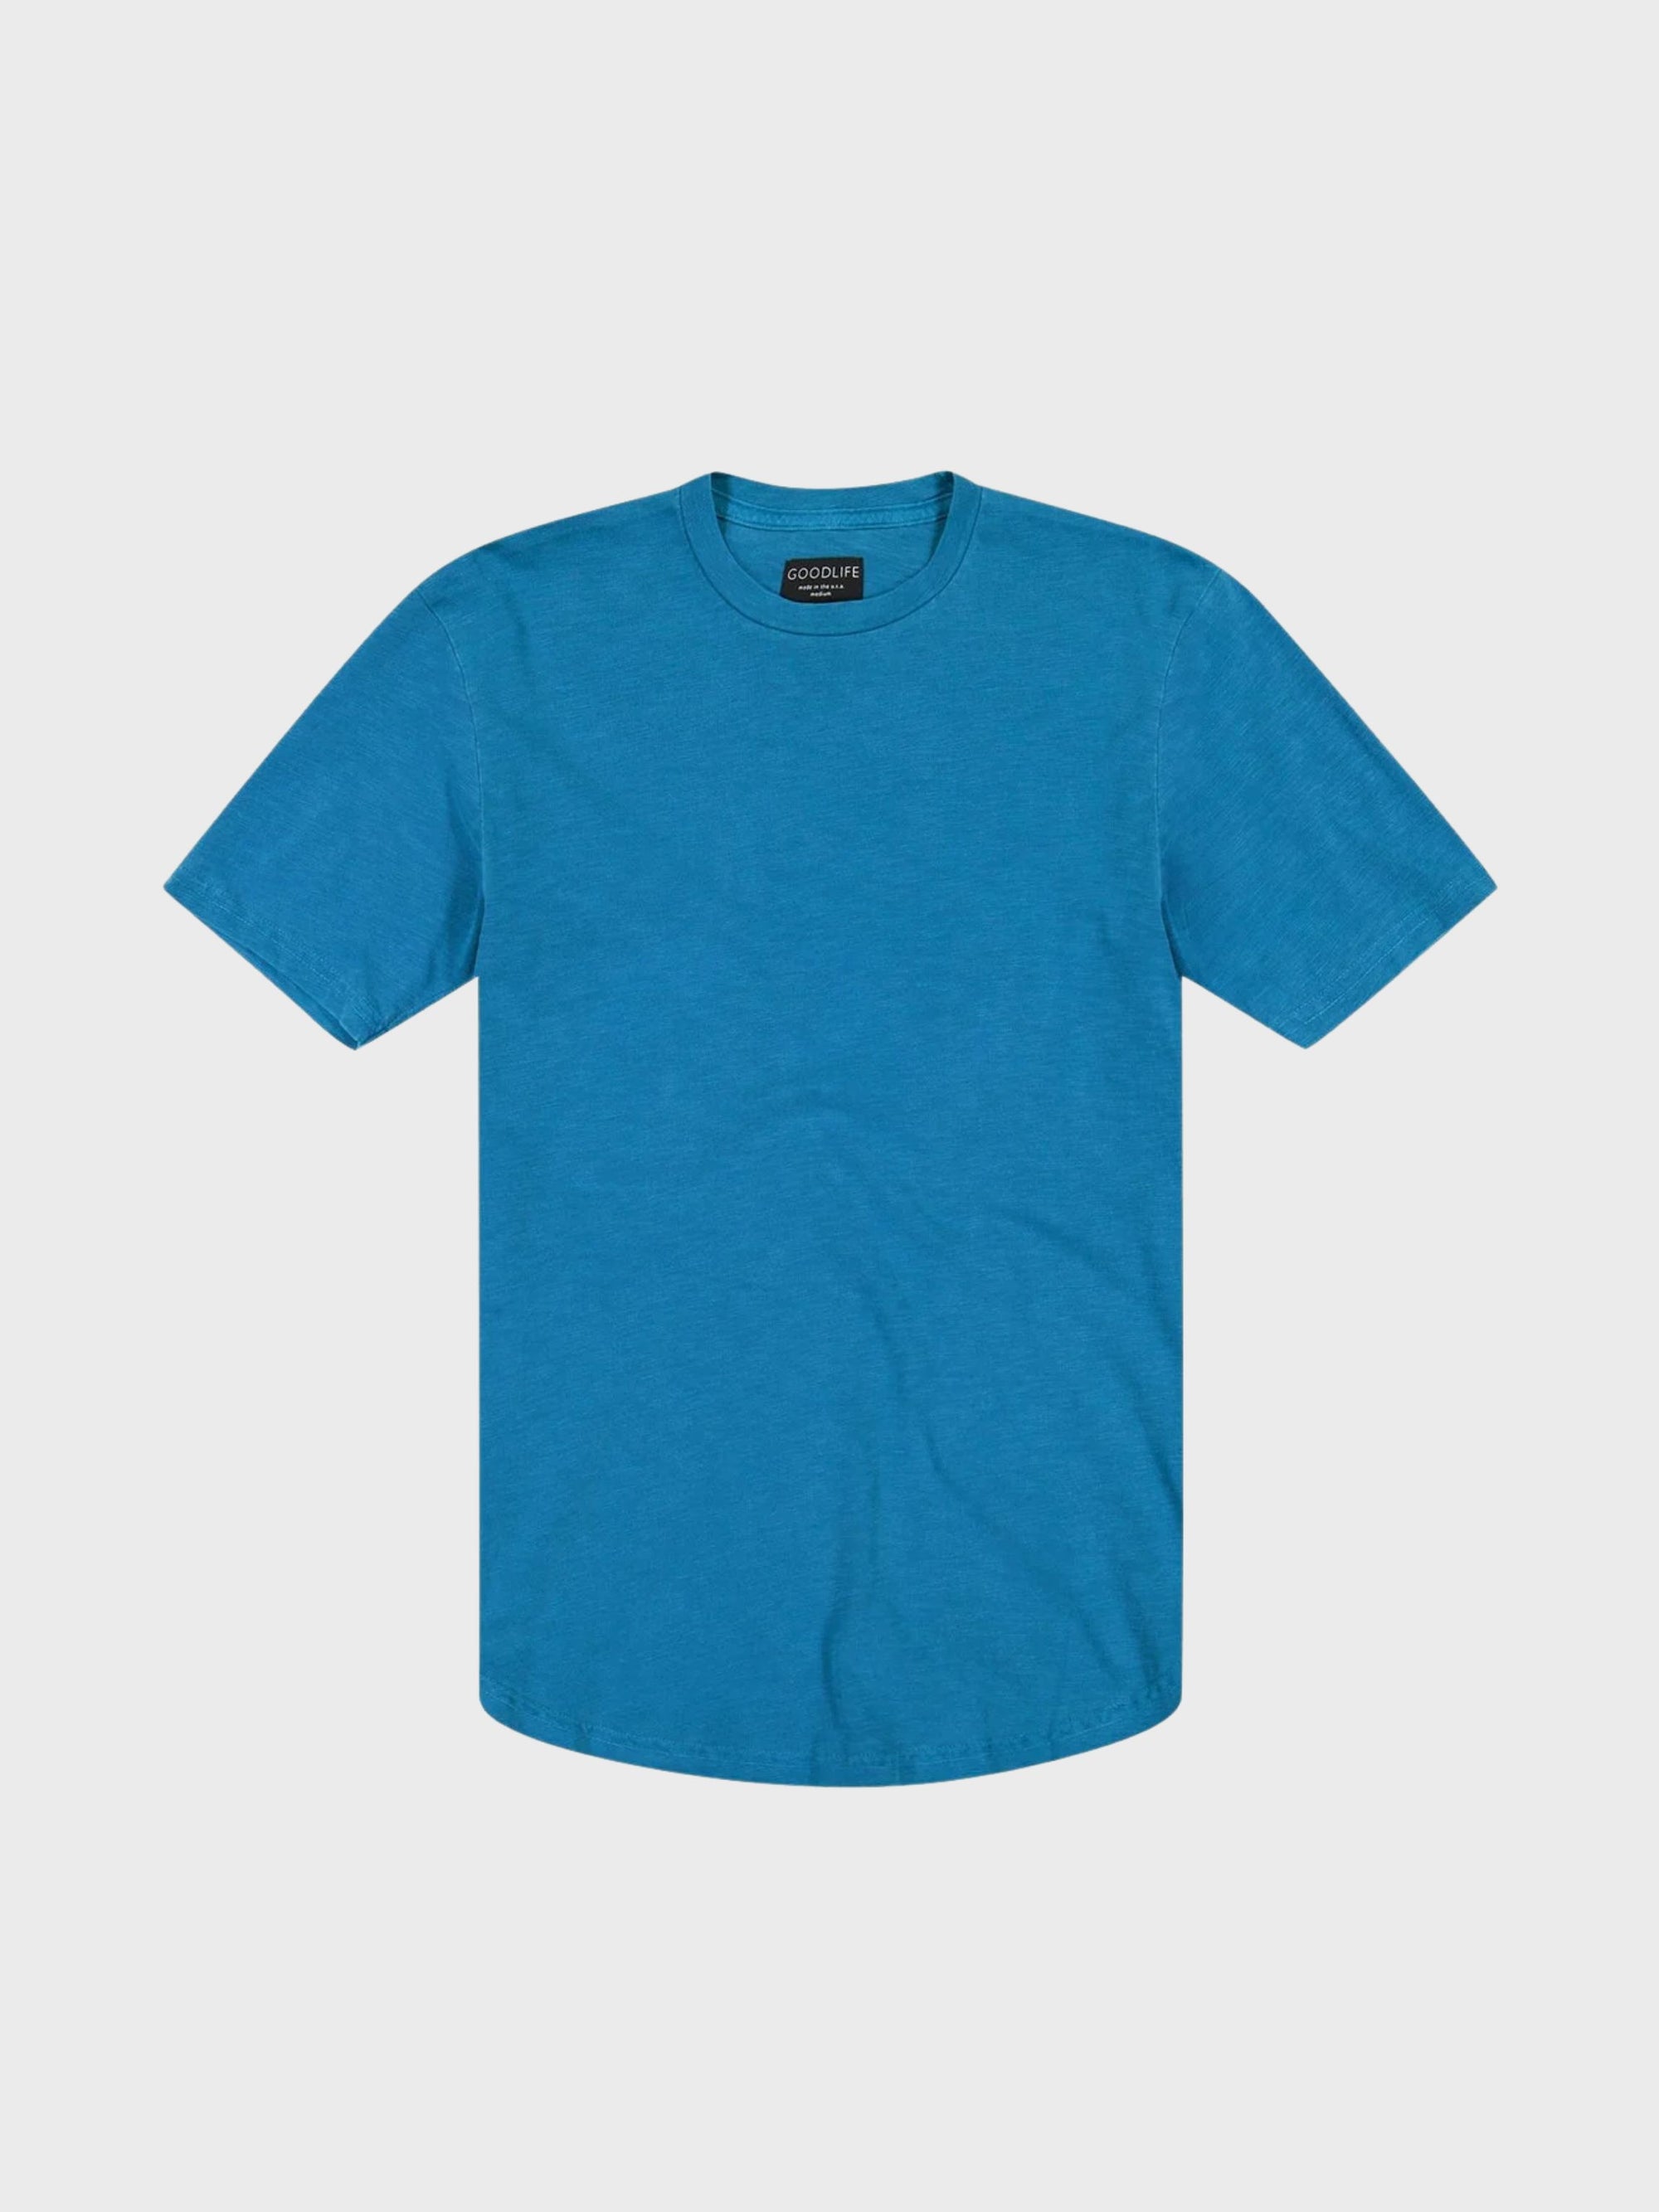 Goodlife Sun Faded Slub Scallop Crew Tee Mykonos Blue-Men's T-Shirts-Yaletown-Vancouver-Surrey-Canada